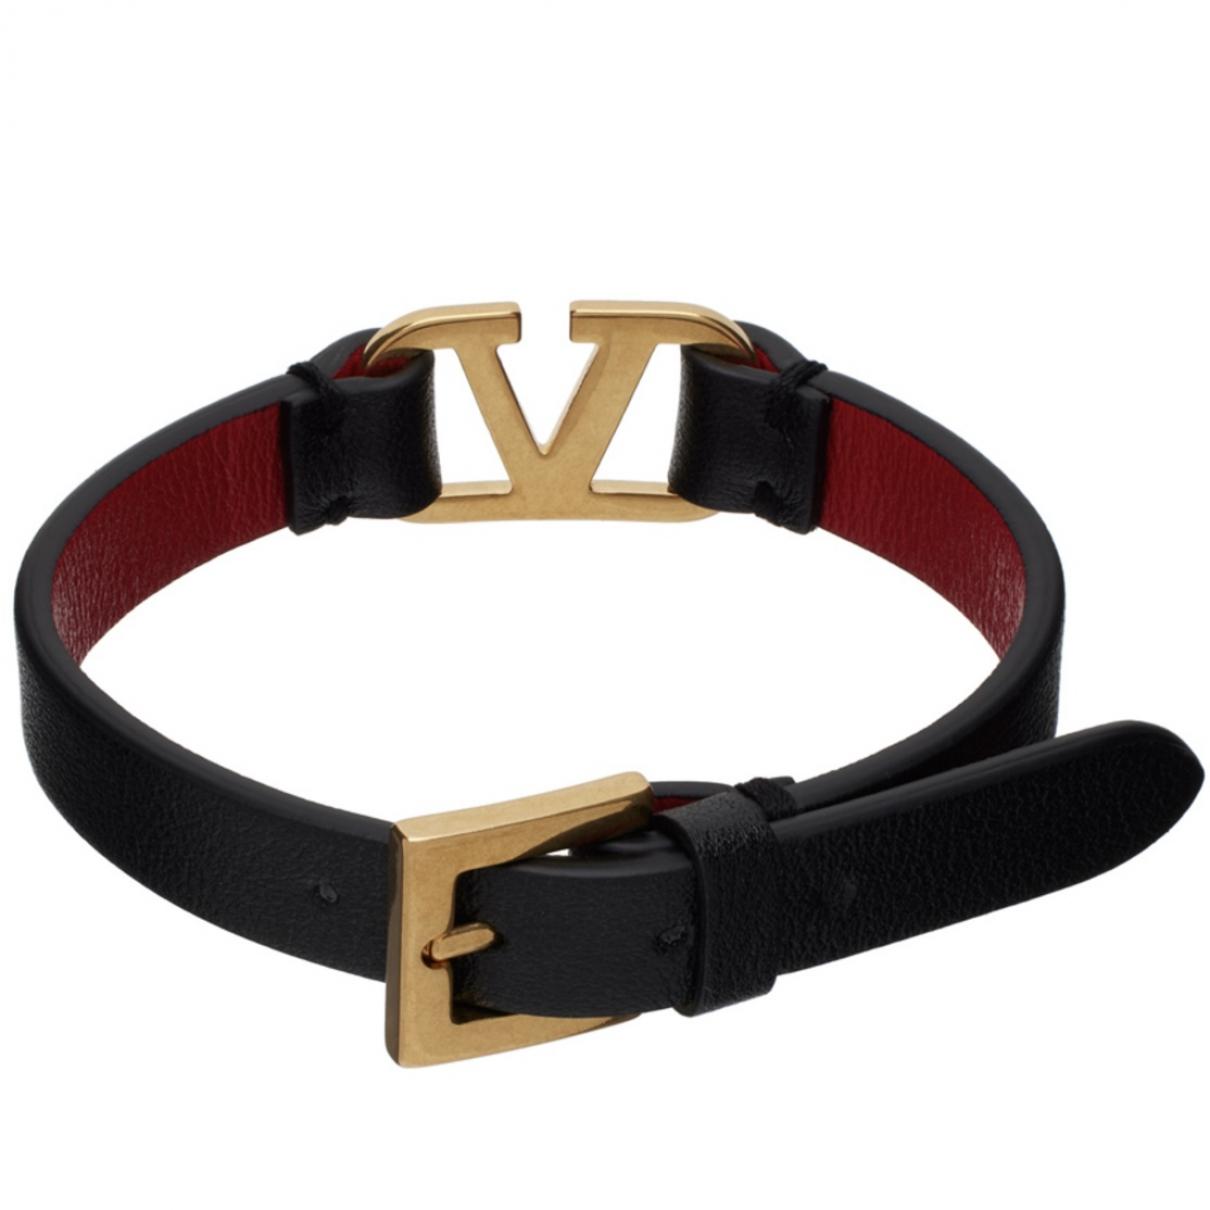 Leather bracelet - 2